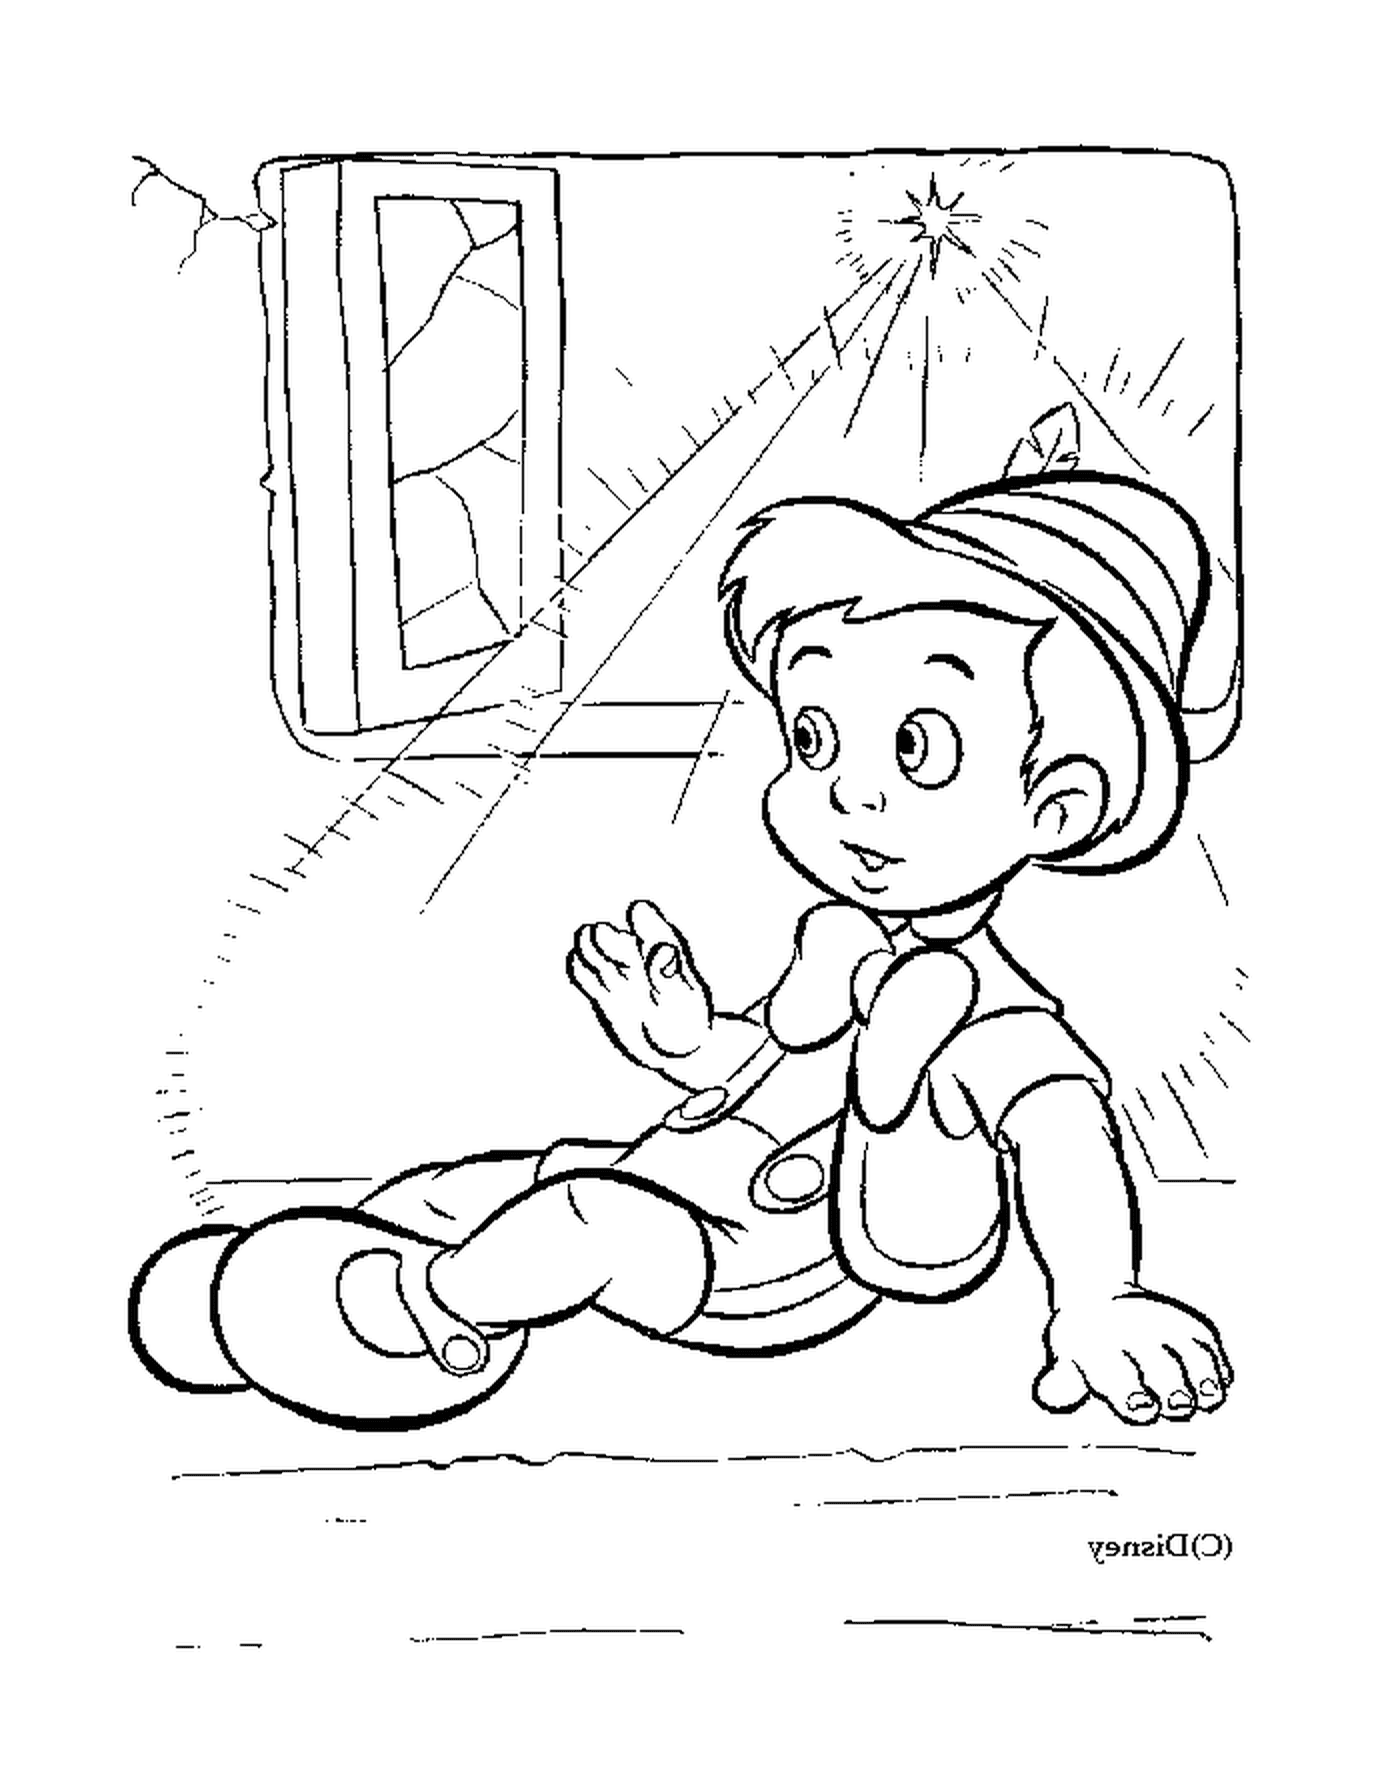  Pinocchio near the window 